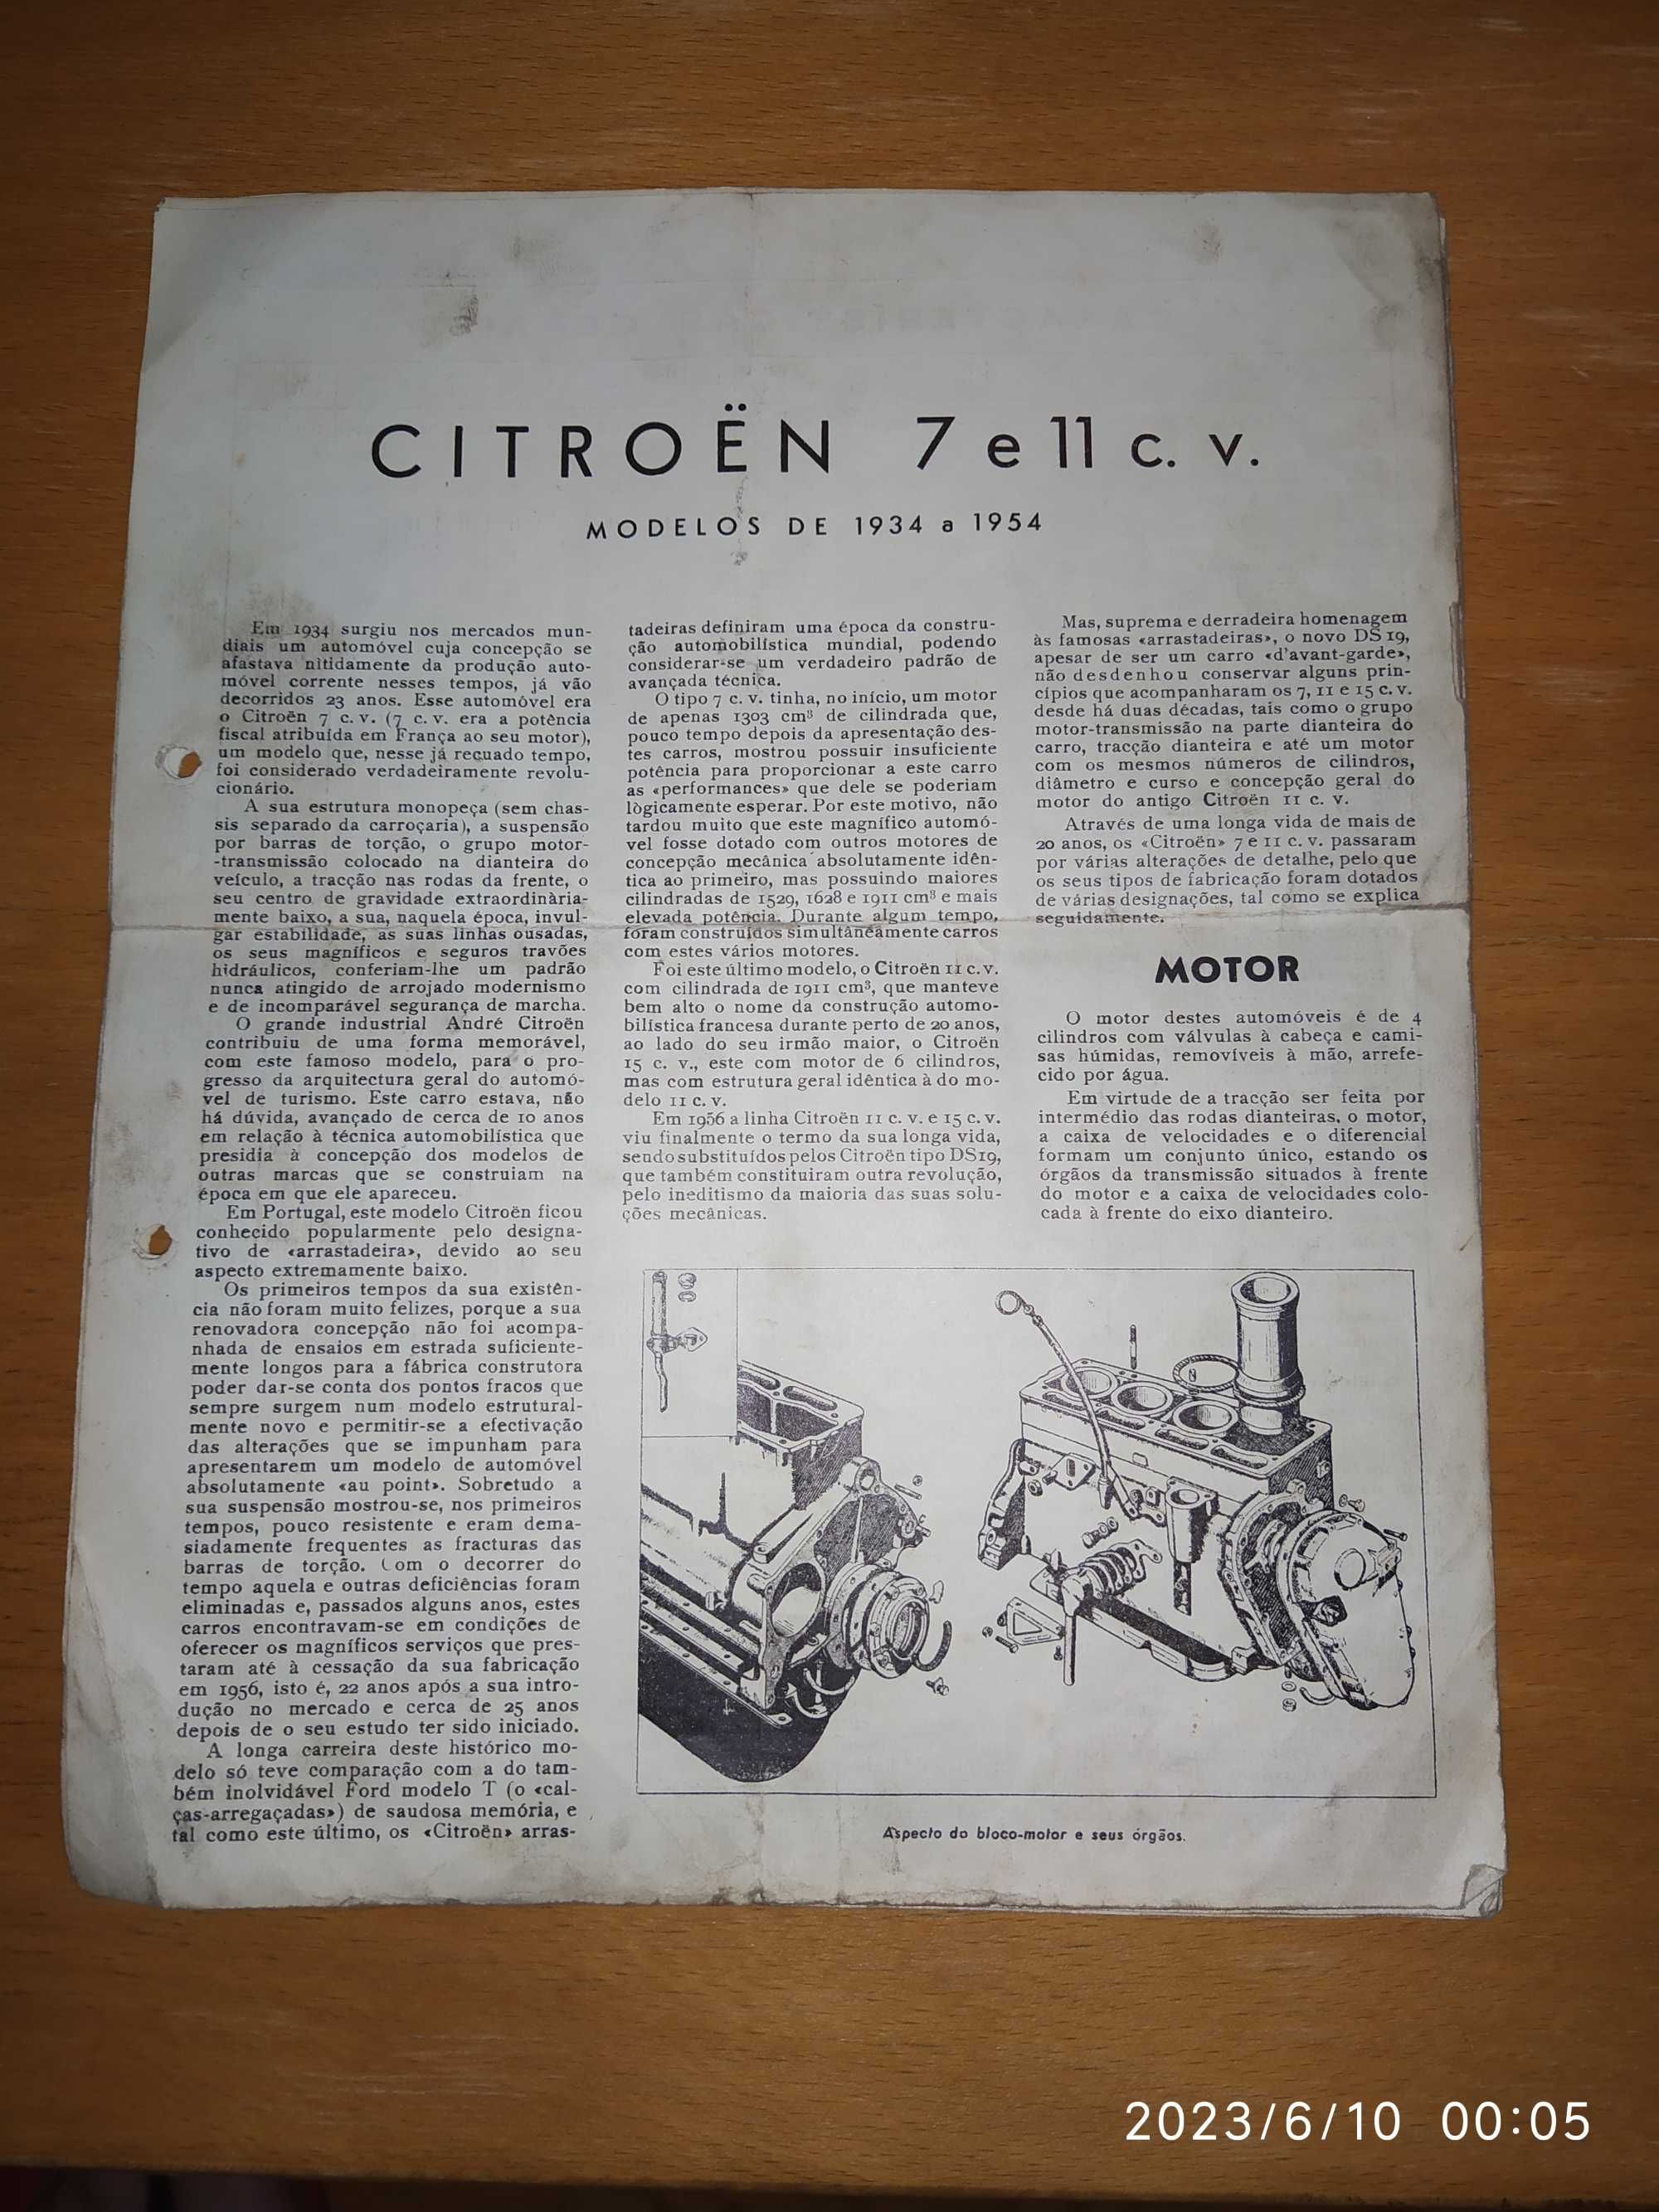 ## manual de mecânica automóvel Citroën 7 & 11 cv (vintage) ##